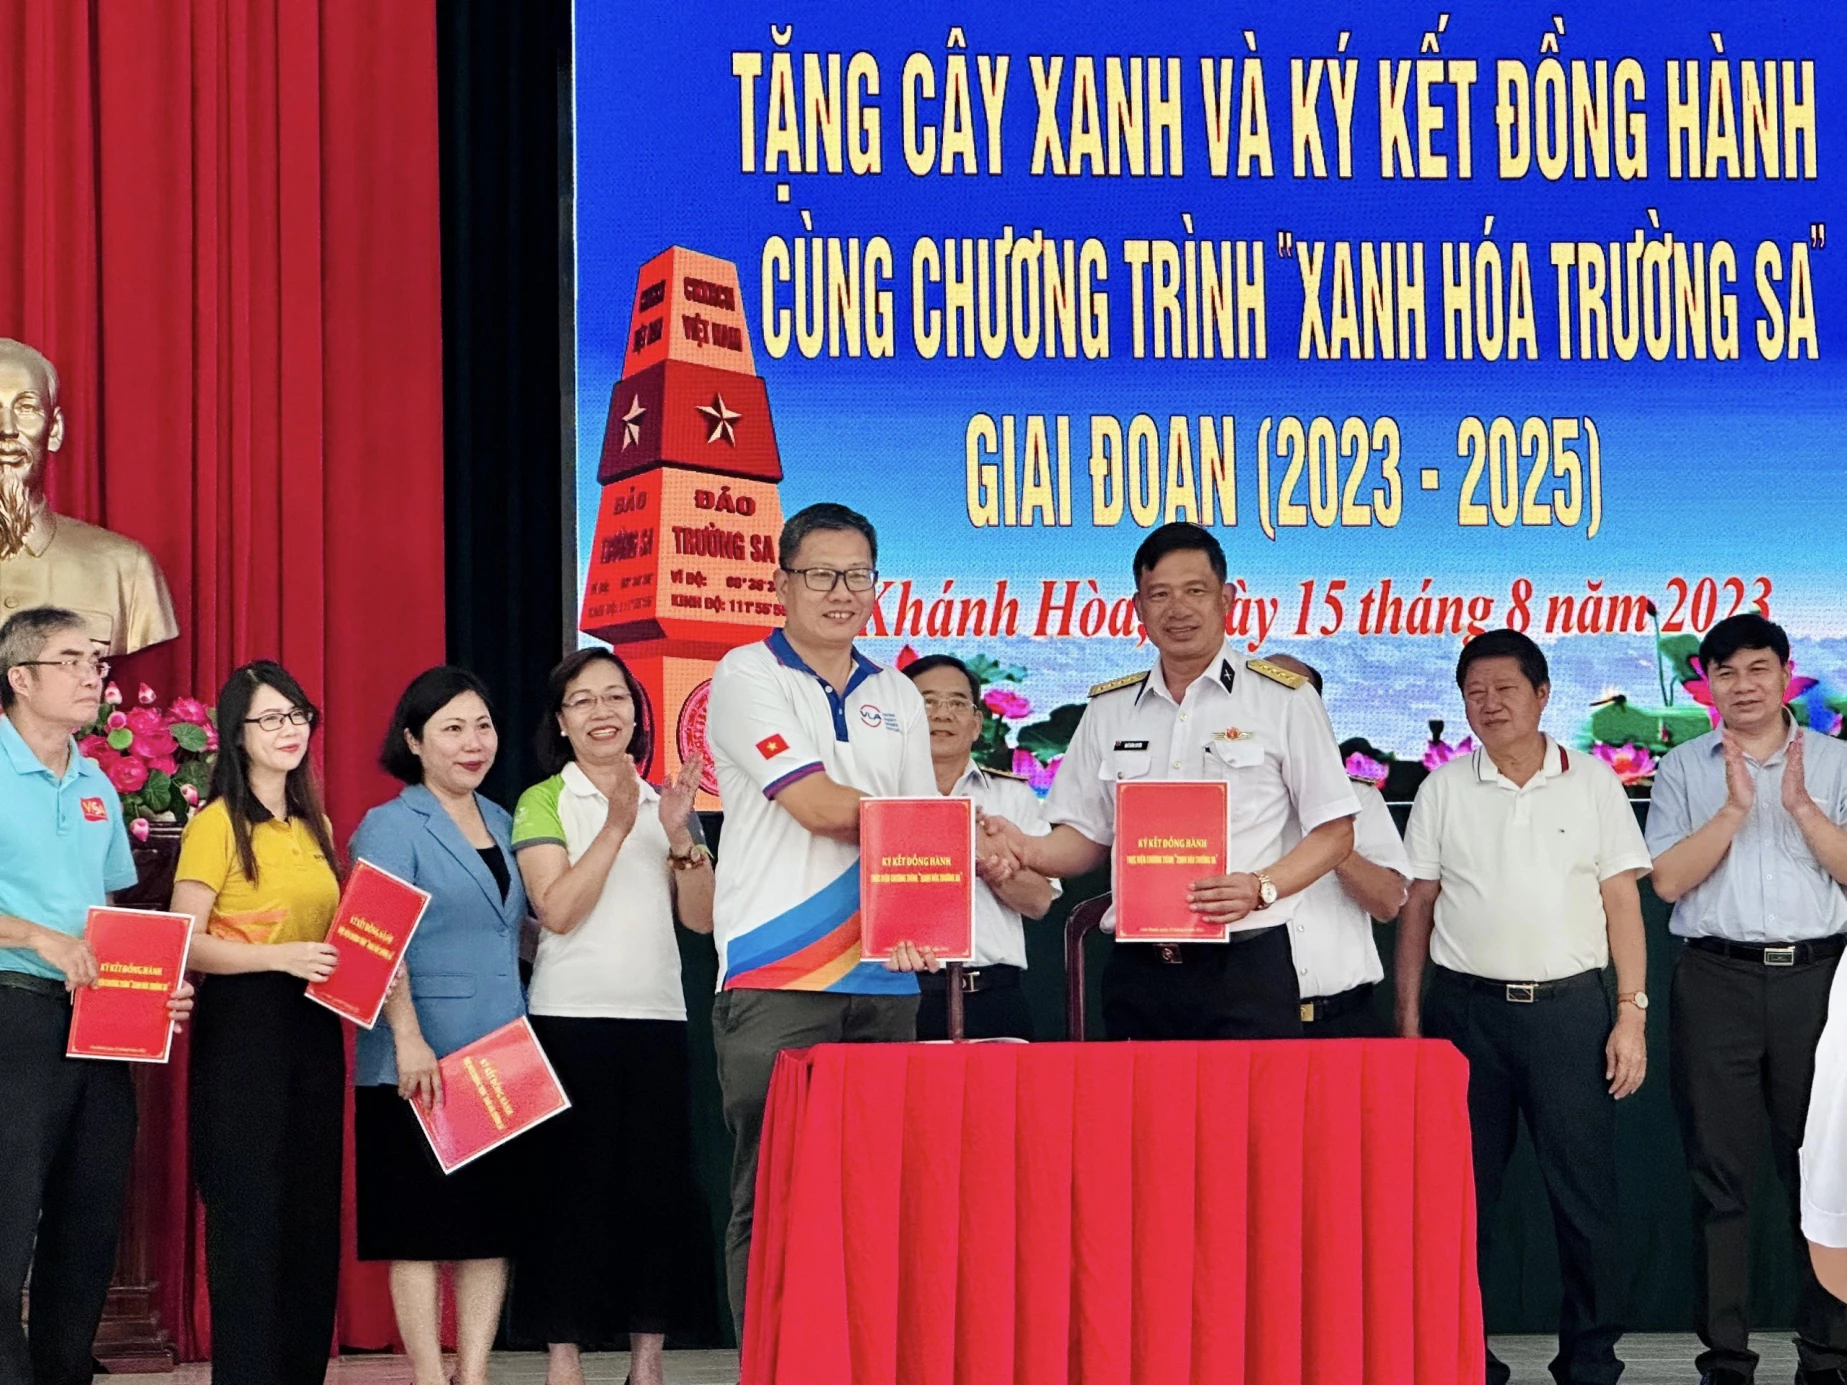 [Truong Sa Island] InterLOG Continues to Support the "Greening Trường Sa" Program